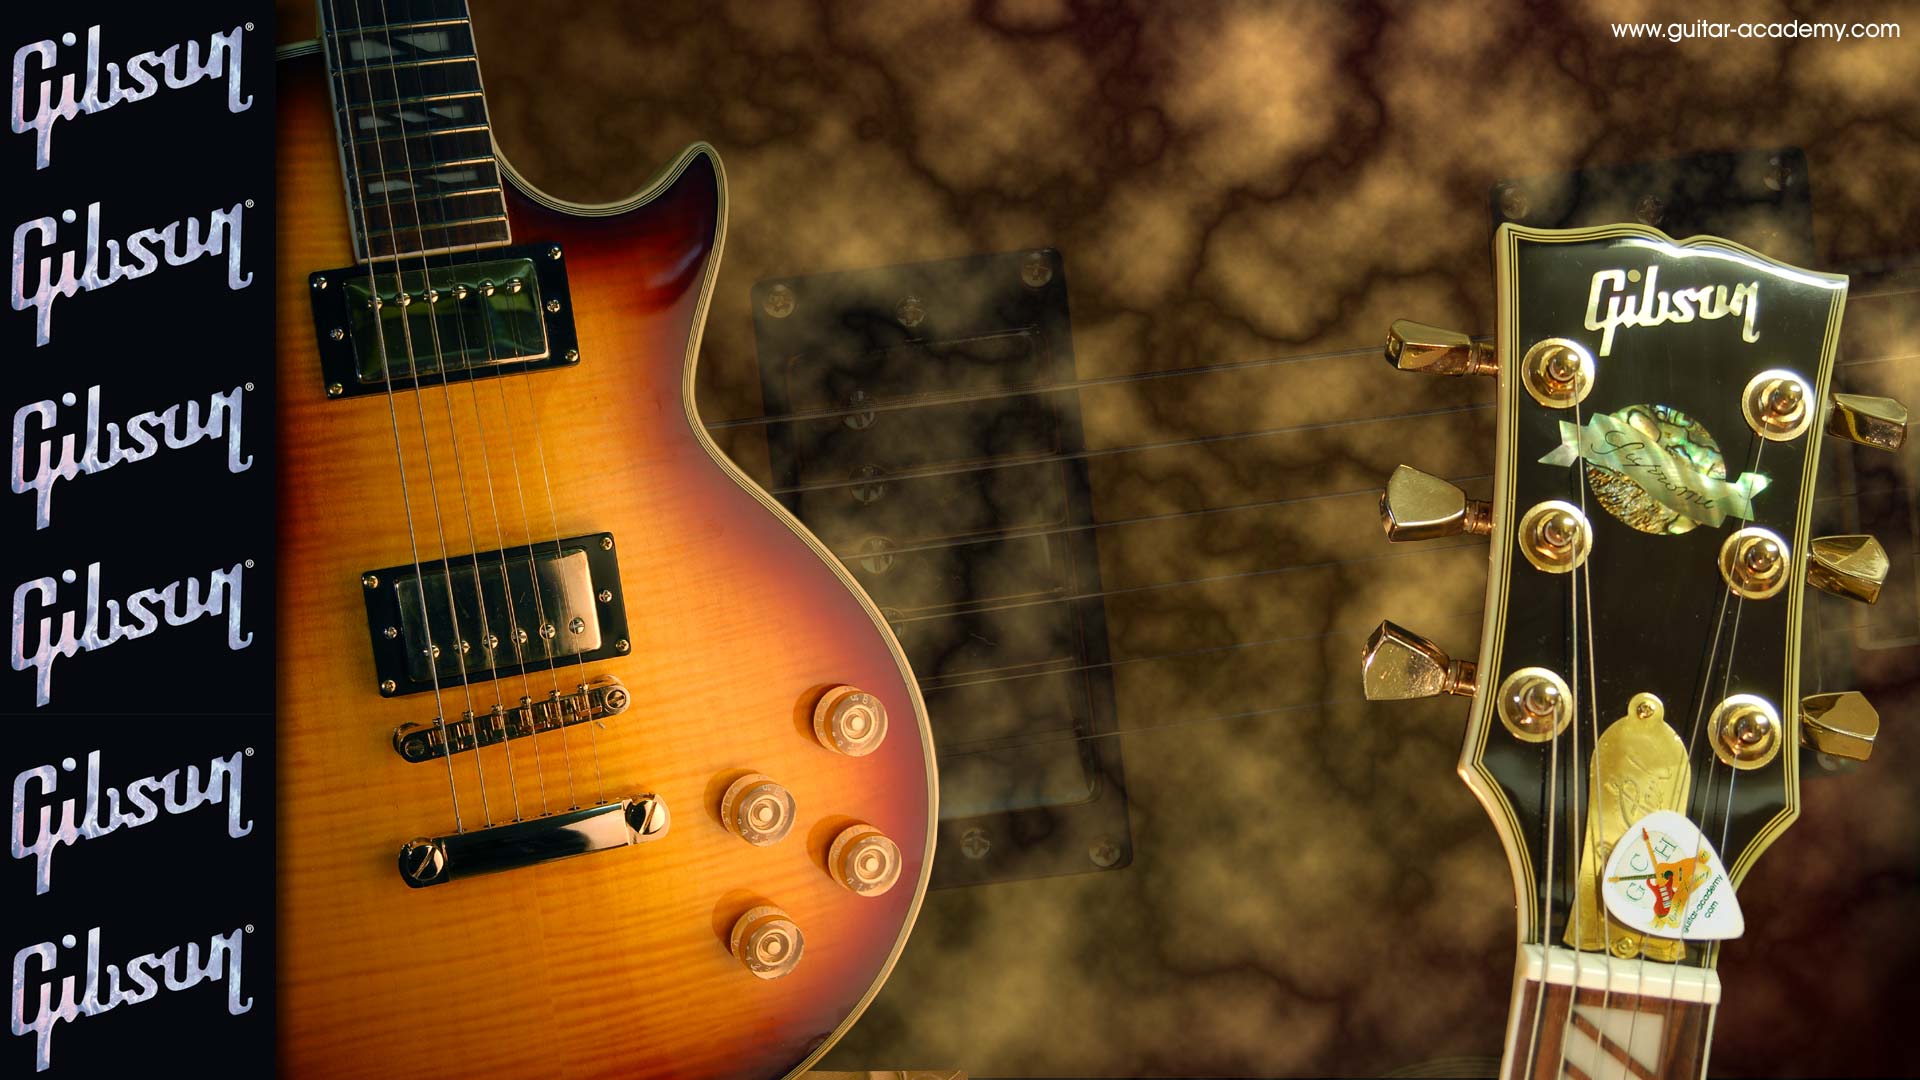 Gibson Background Screensavers Screens Image Wallpaper Guitar